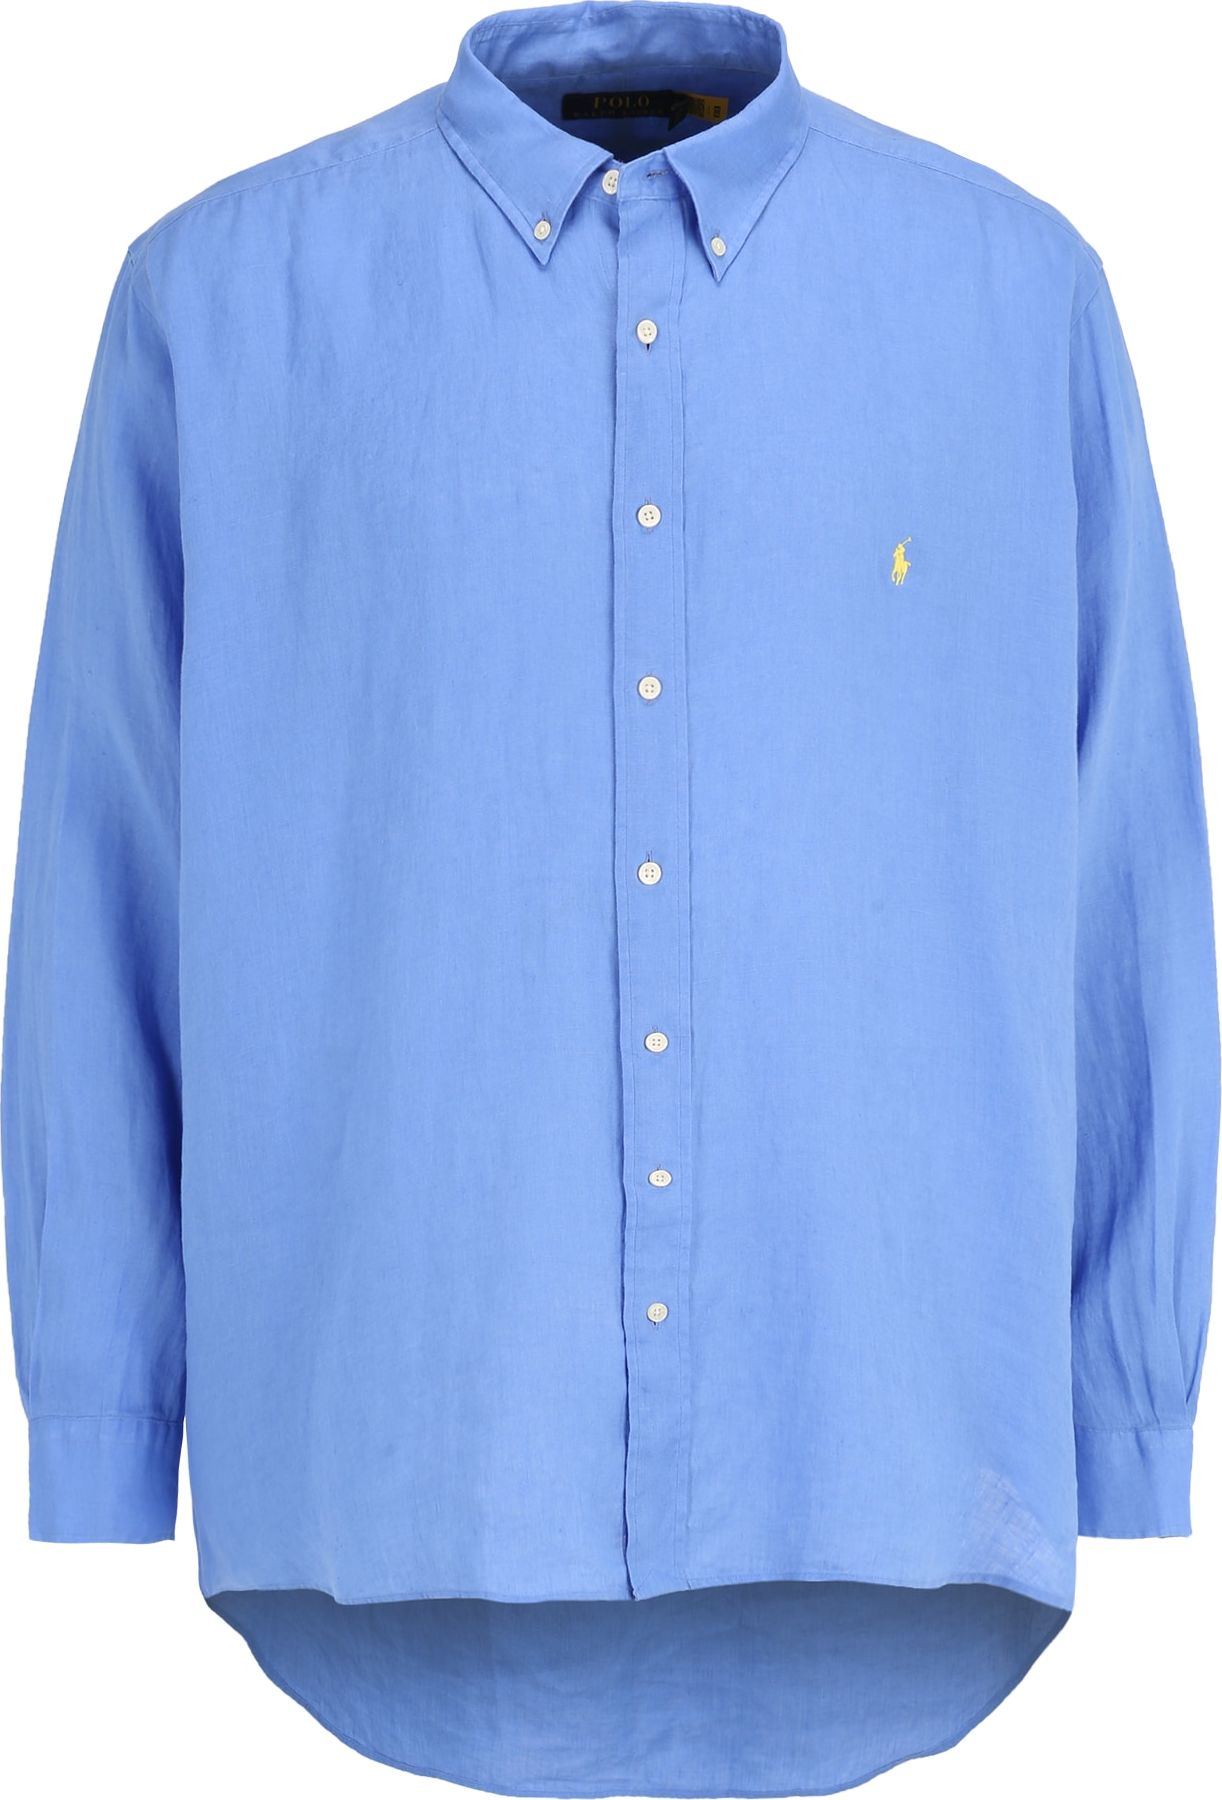 Košile Polo Ralph Lauren Big & Tall světlemodrá / žlutá